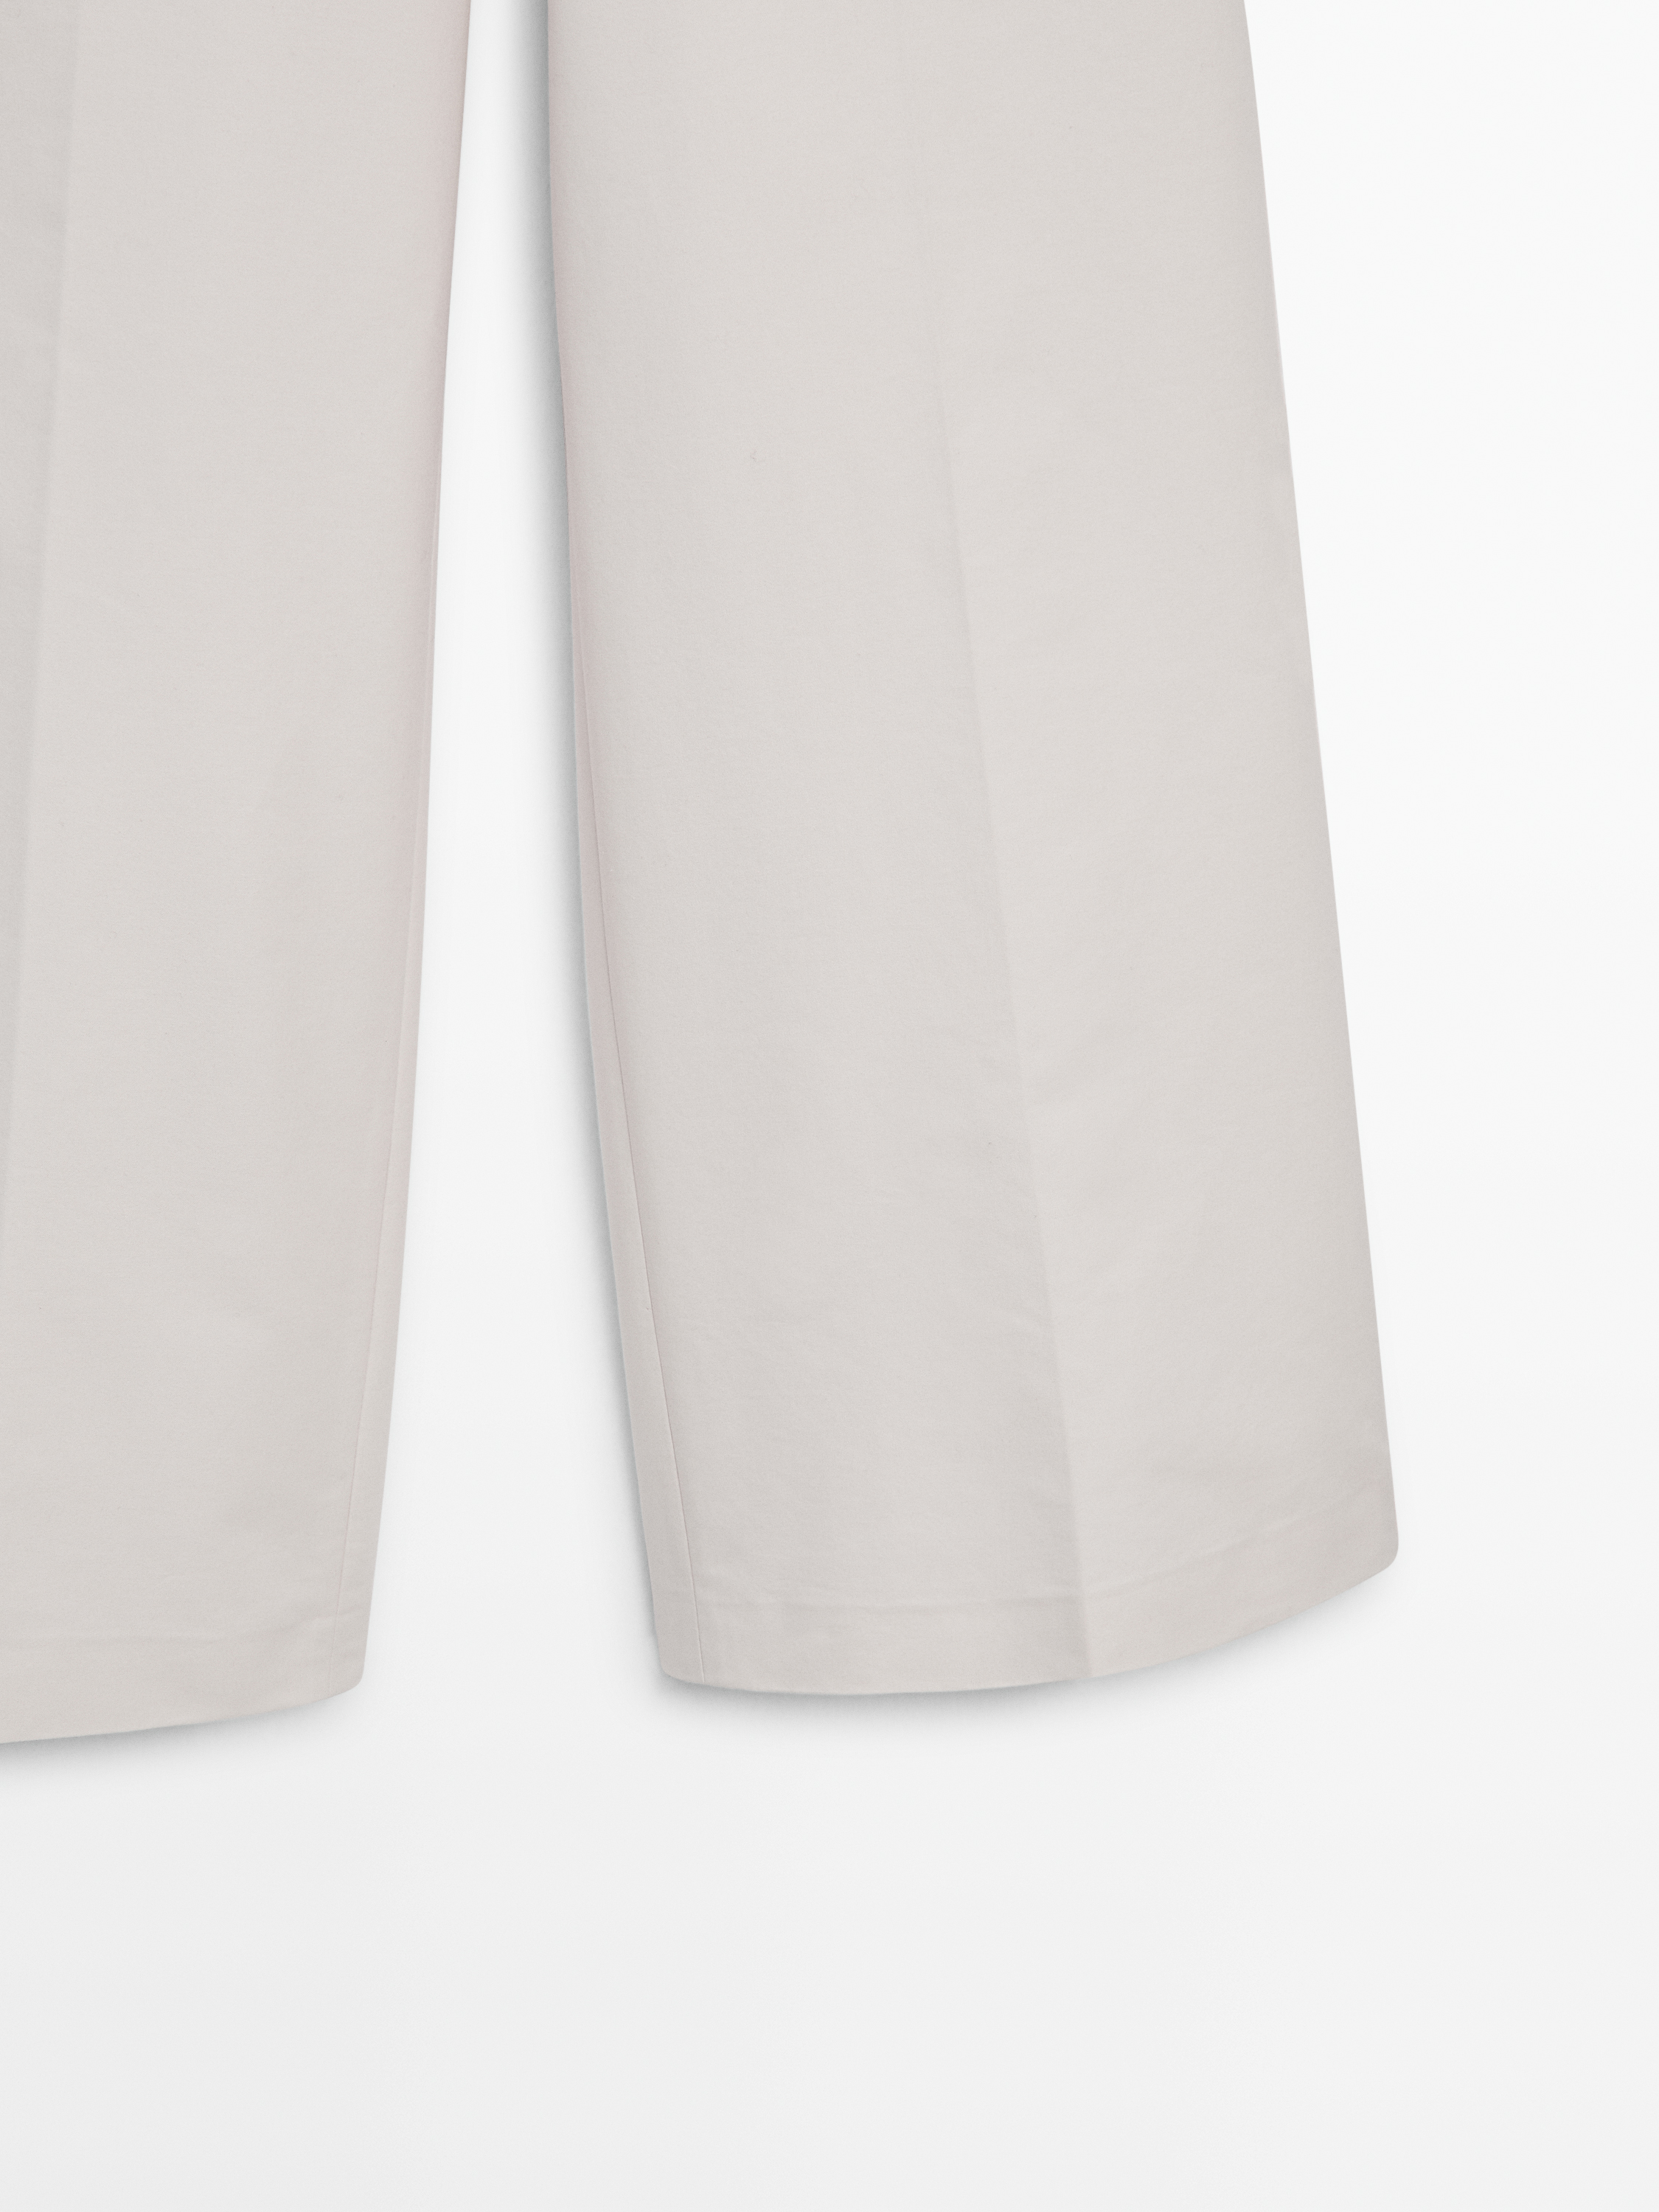 Cotton blend wide-leg trousers